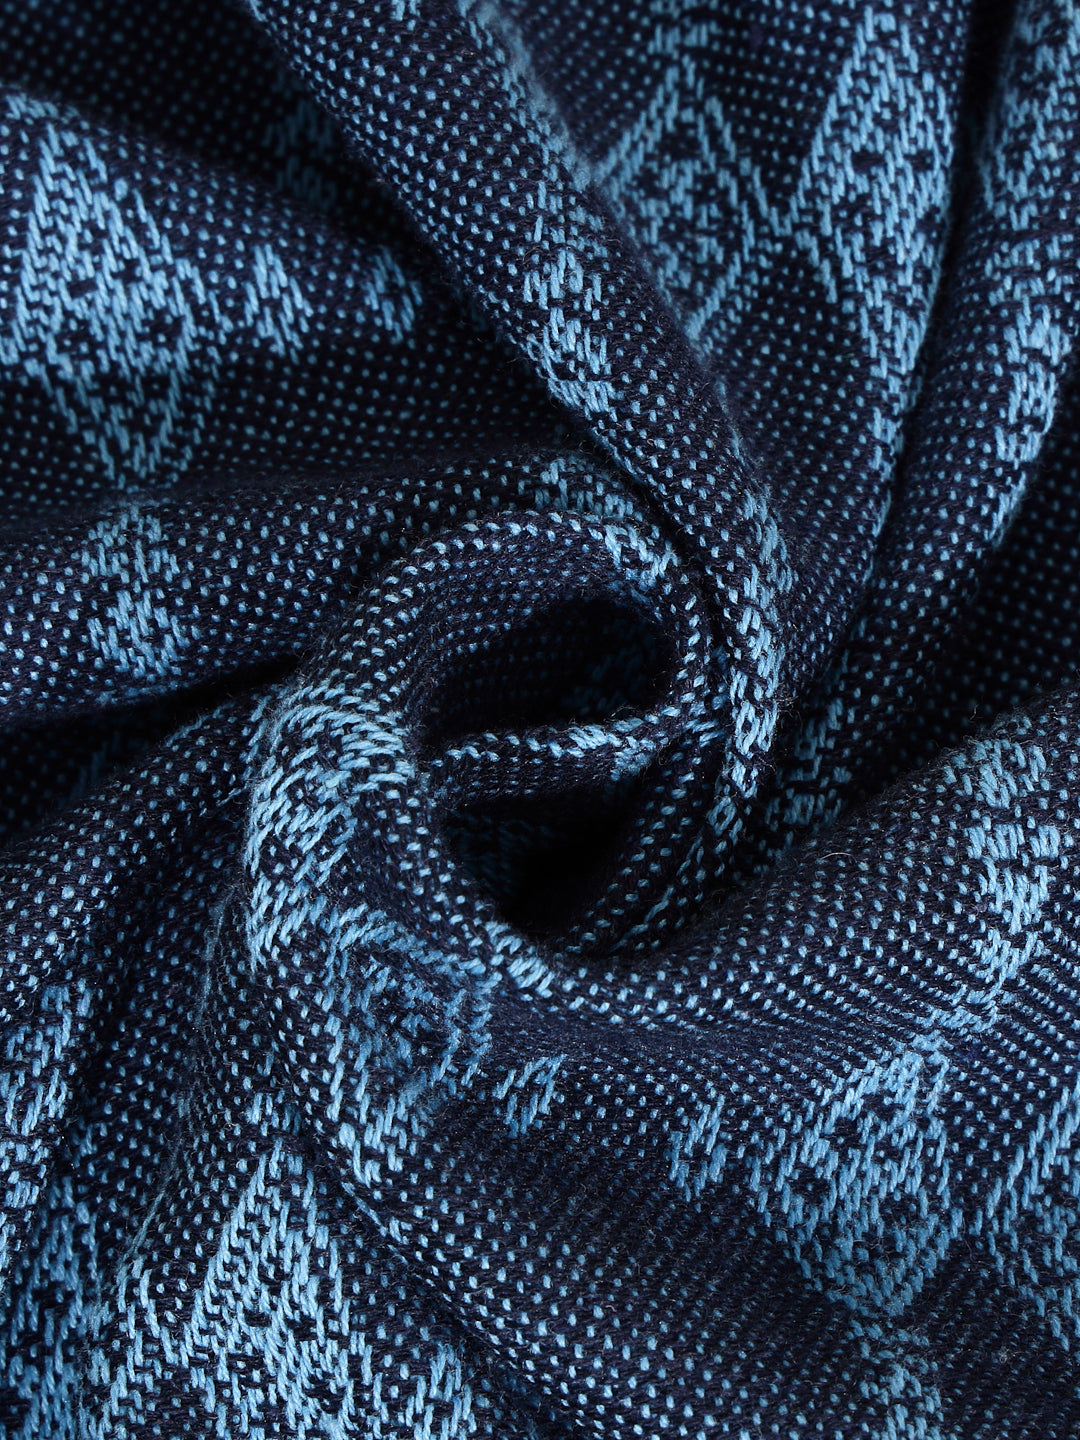 Arrabi Blue Striped 100% Handwoven Cotton 8 SEATER Table Cover (225 x 150 cm)